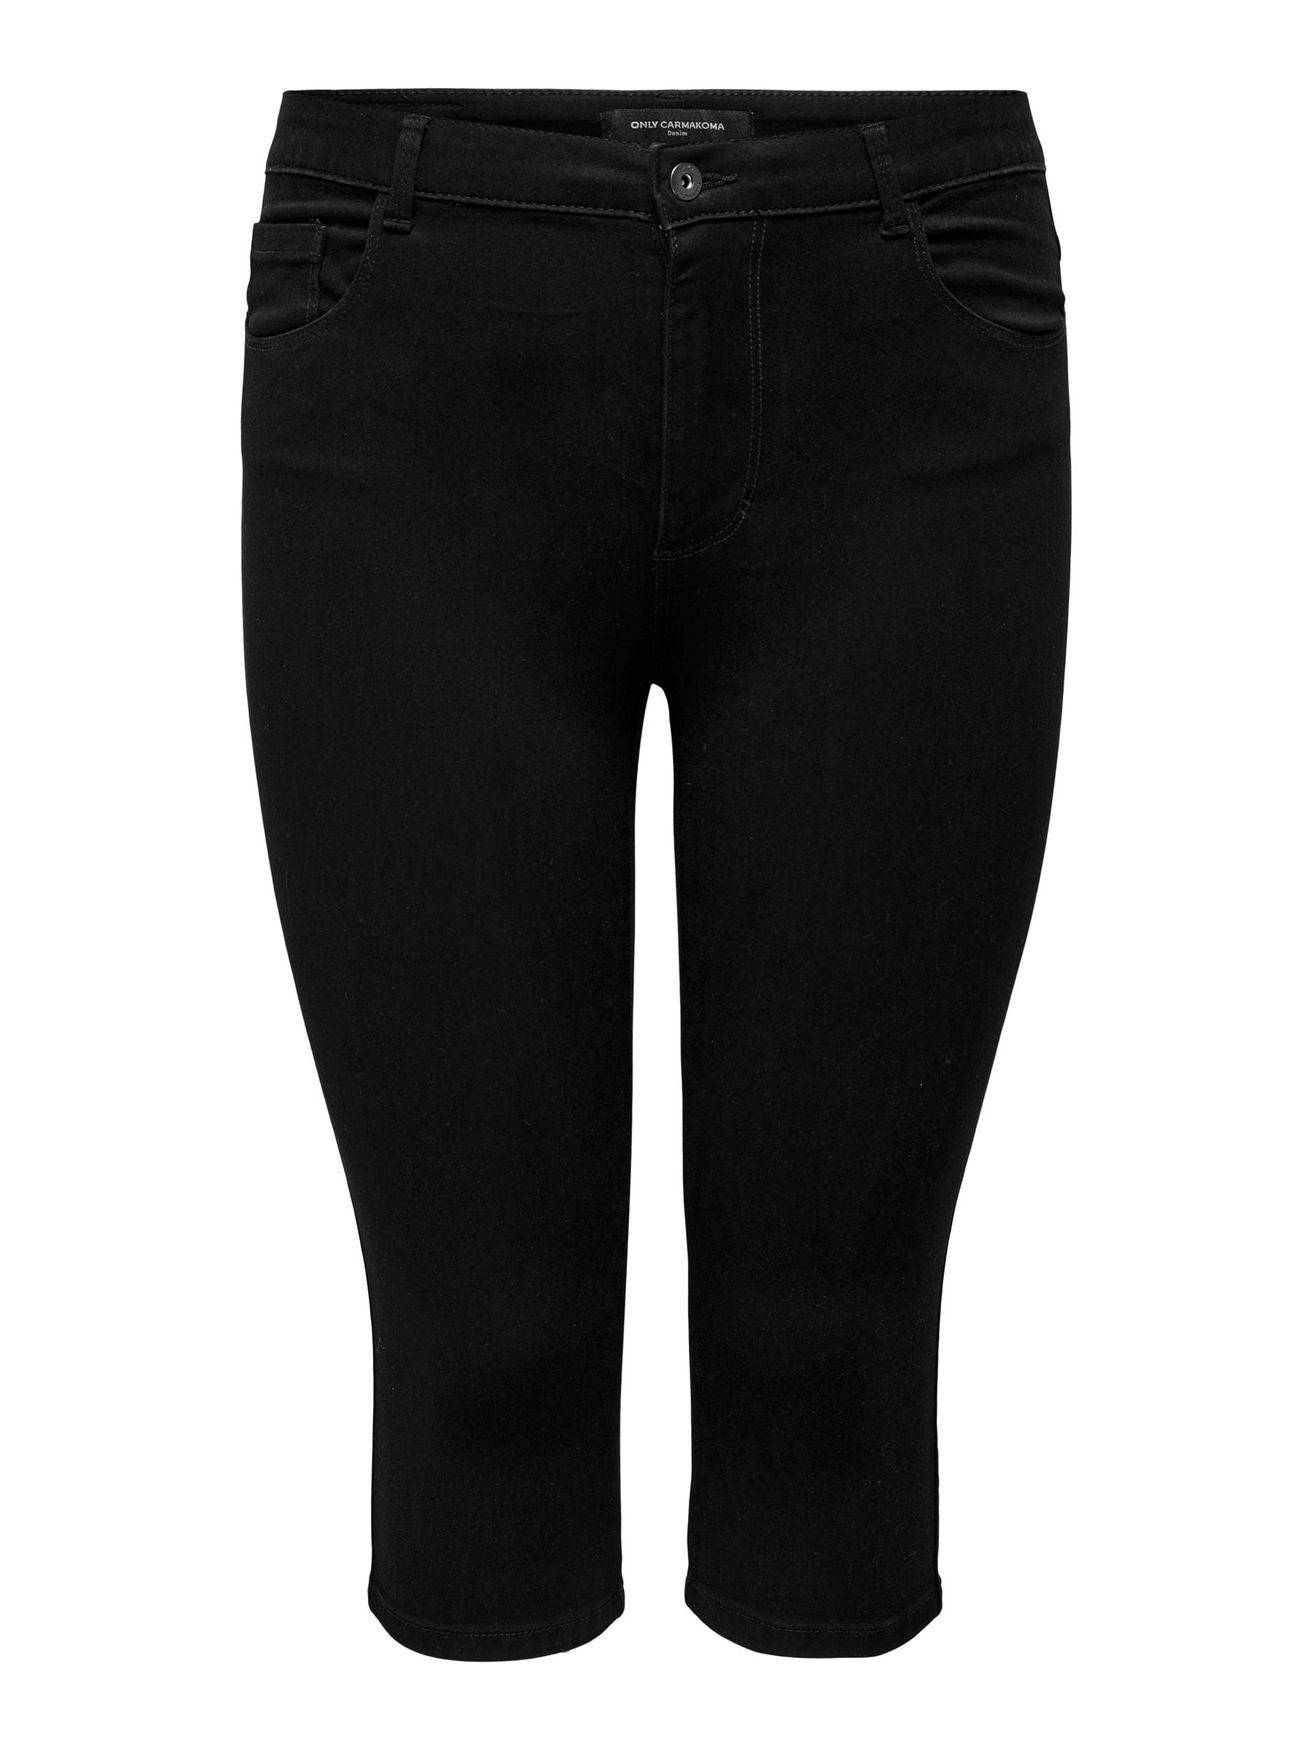 CARAUGUSTA Size Plus ONLY Jeans Caprihose Übergröße CARMAKOMA Shorts Schwarz 4794 3/4Capri in Denim Hose